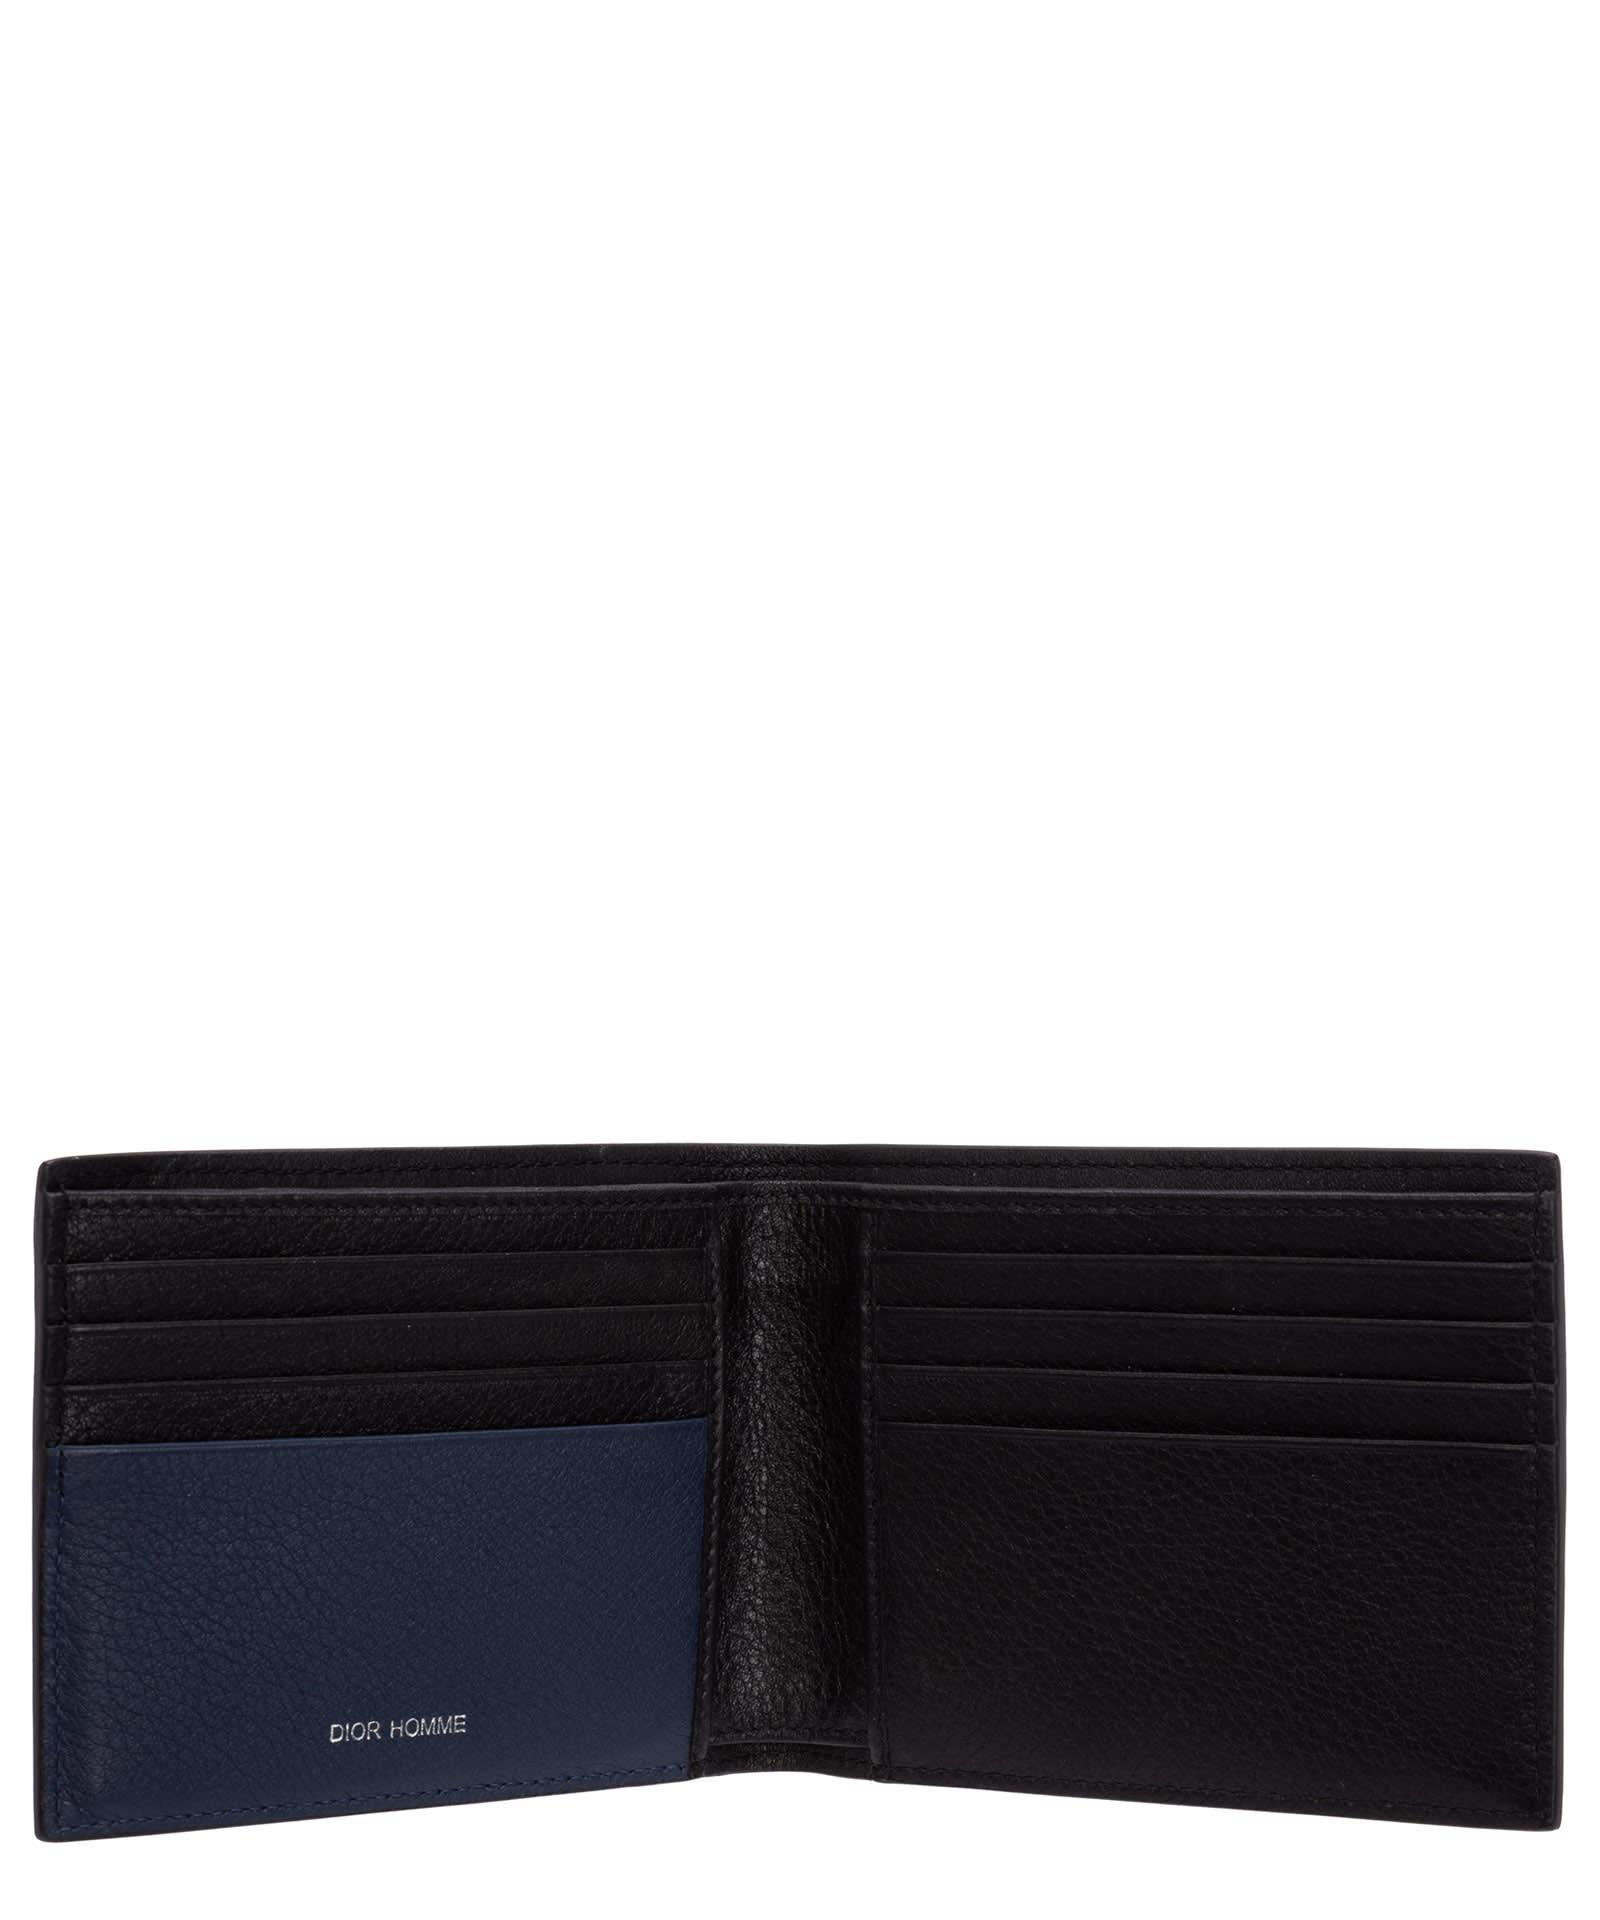 Christian Dior Homme Logo Printed Bifold Black Wallet